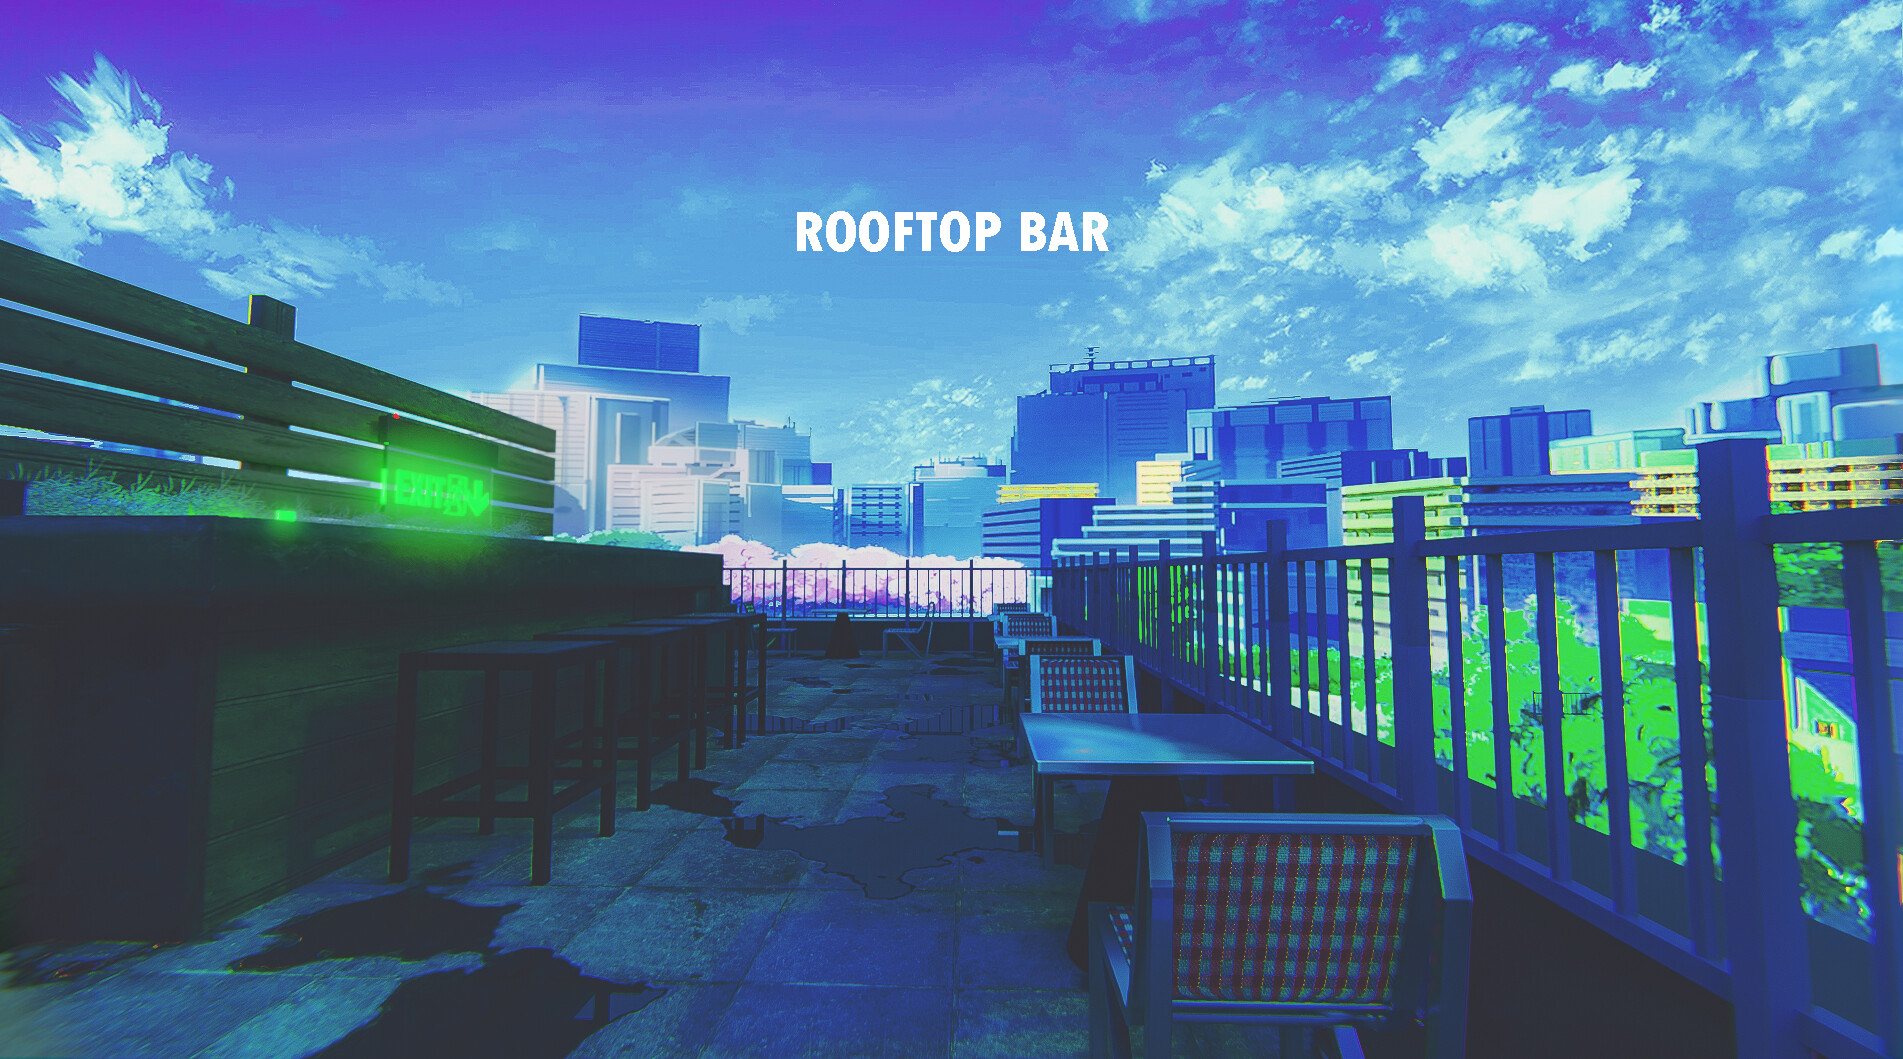 Roof Top - Other & Anime Background Wallpapers on Desktop Nexus (Image  1501815)